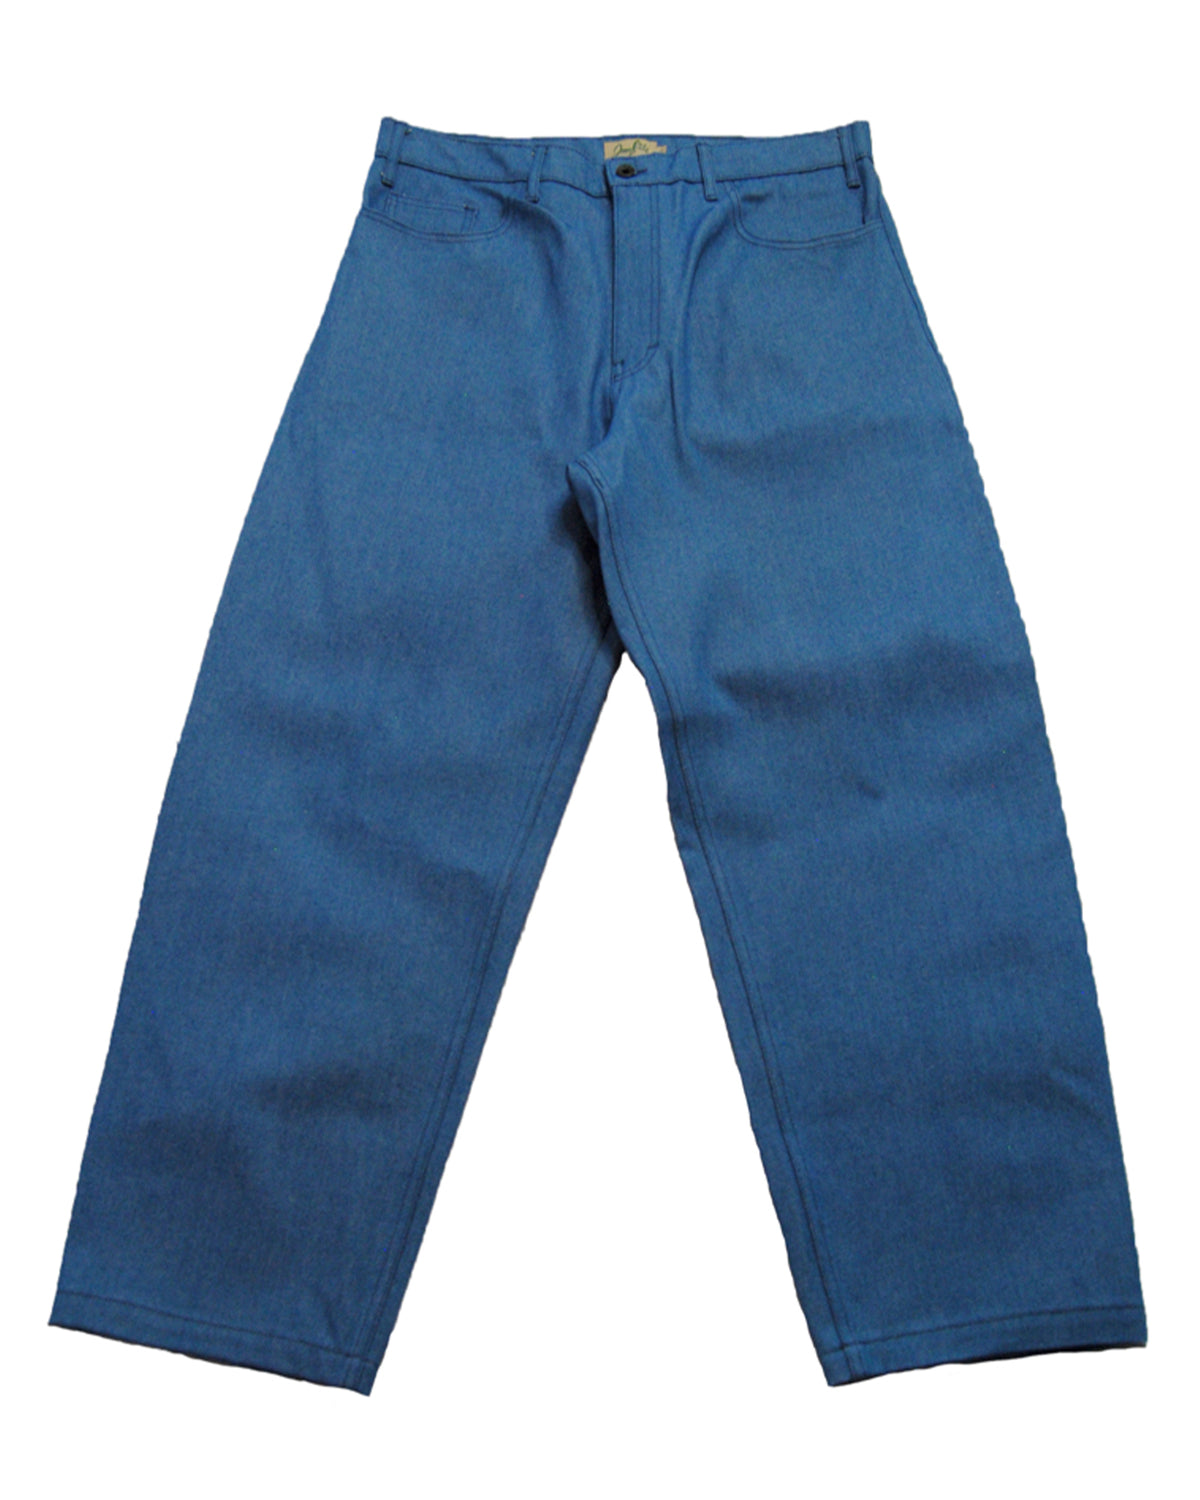 Loose Fits Baggy 5 Pocket Jean